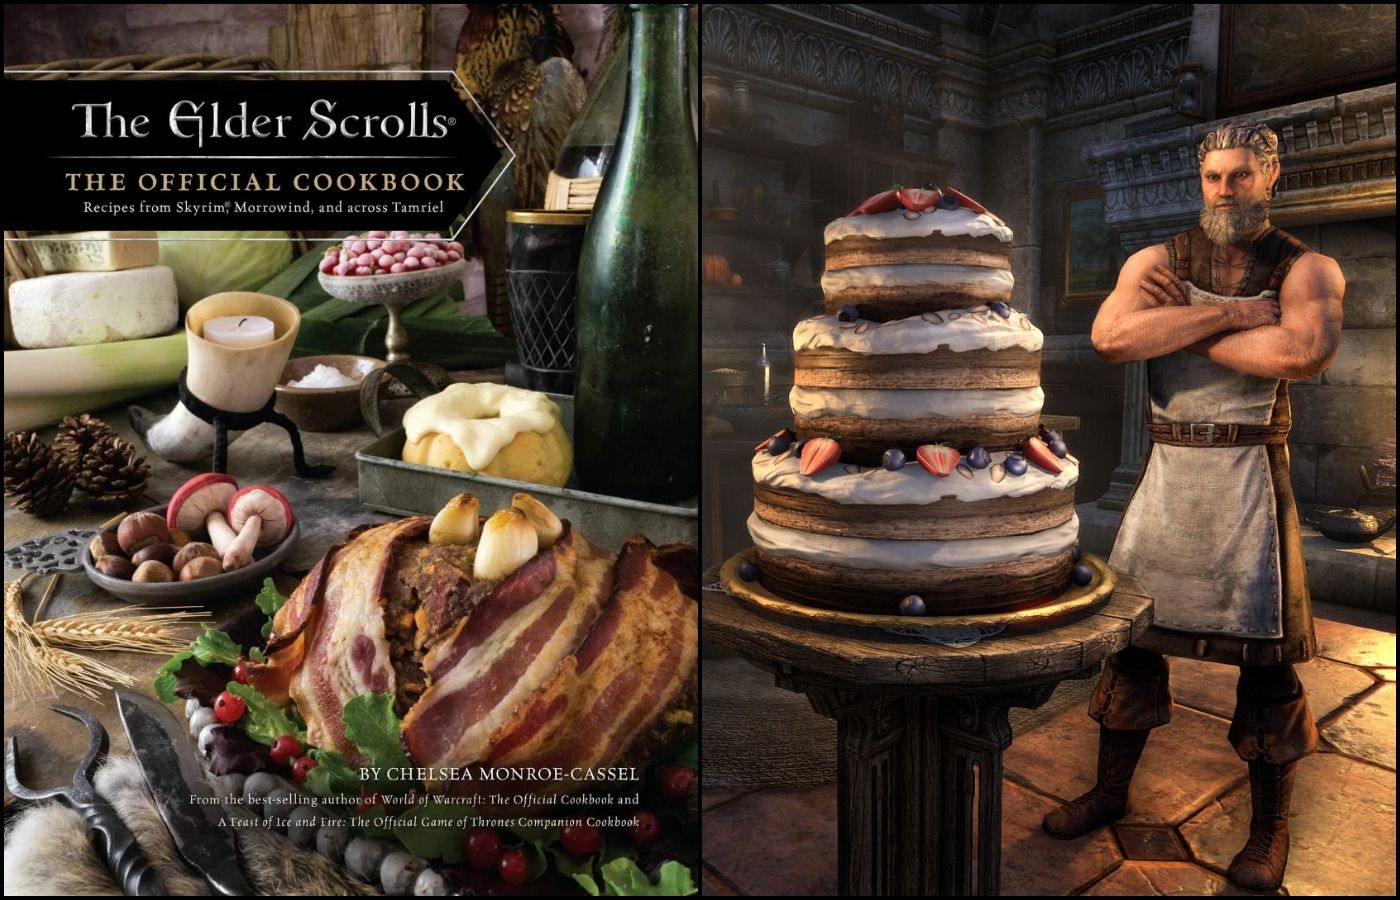 The Elder Scrolls Cookbook